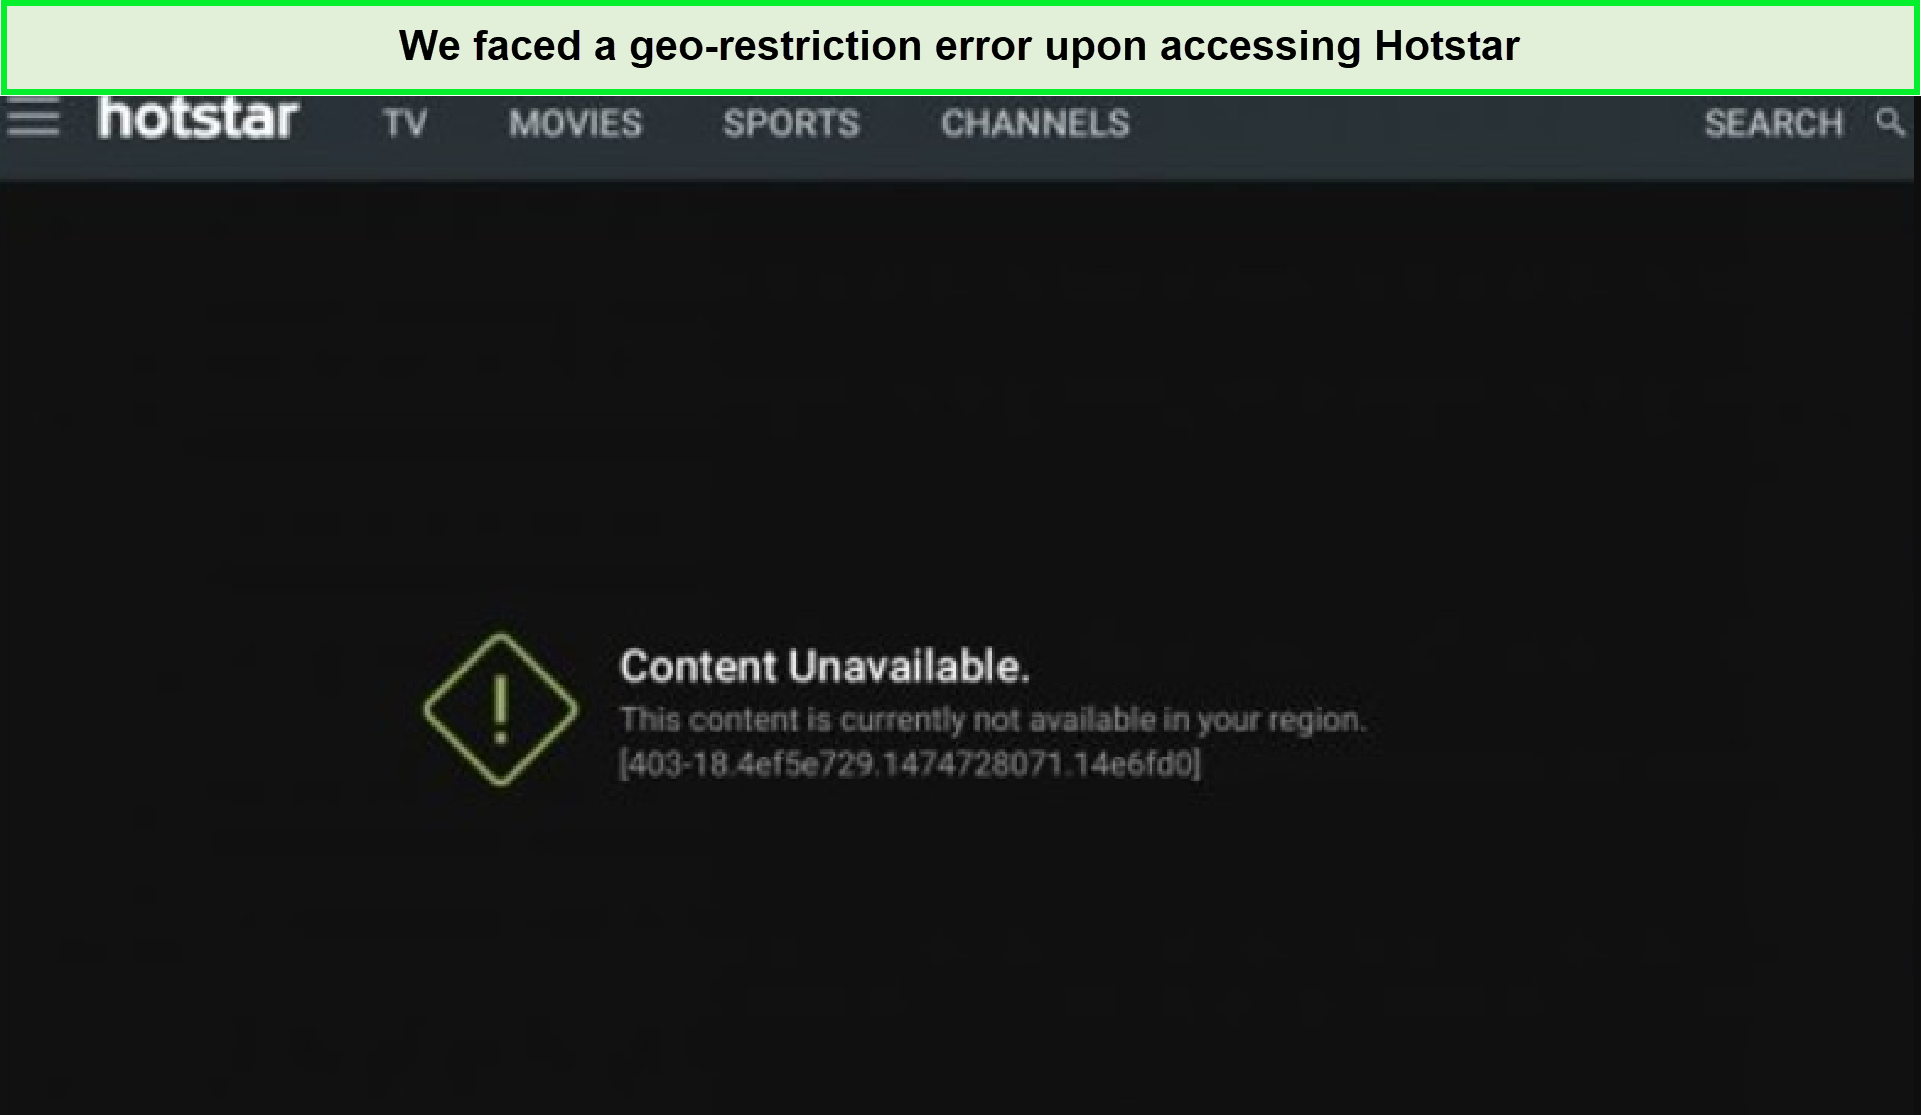 hotstar-in-Spain-geo-restriction-error